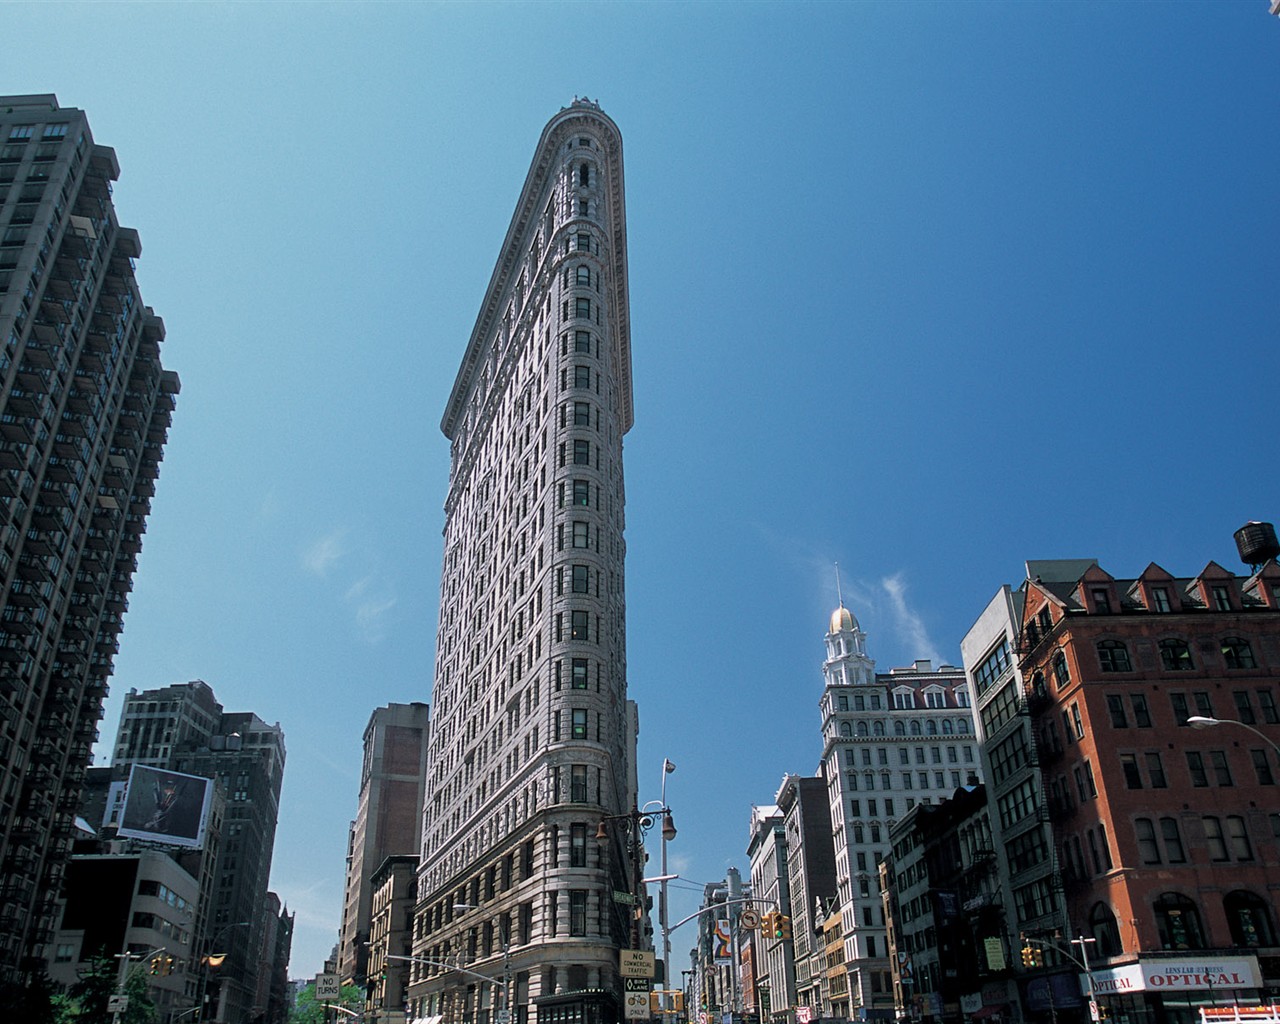 Quirligen Stadt New York Building #8 - 1280x1024